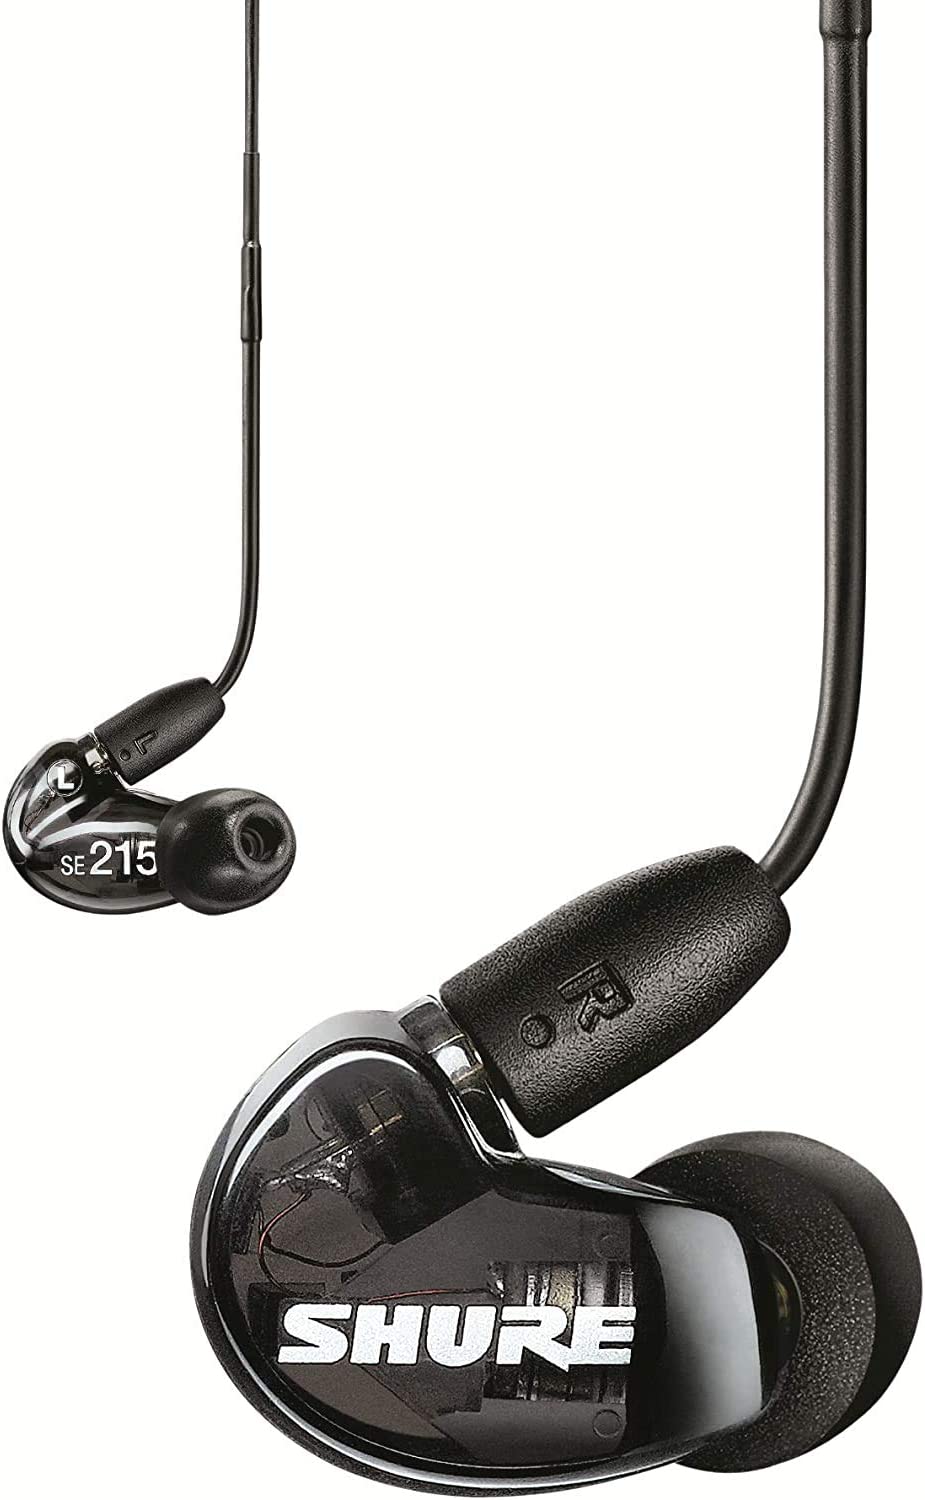 SHURE AONIC 215 SOUND ISOLATING EARPHONES - BLACK